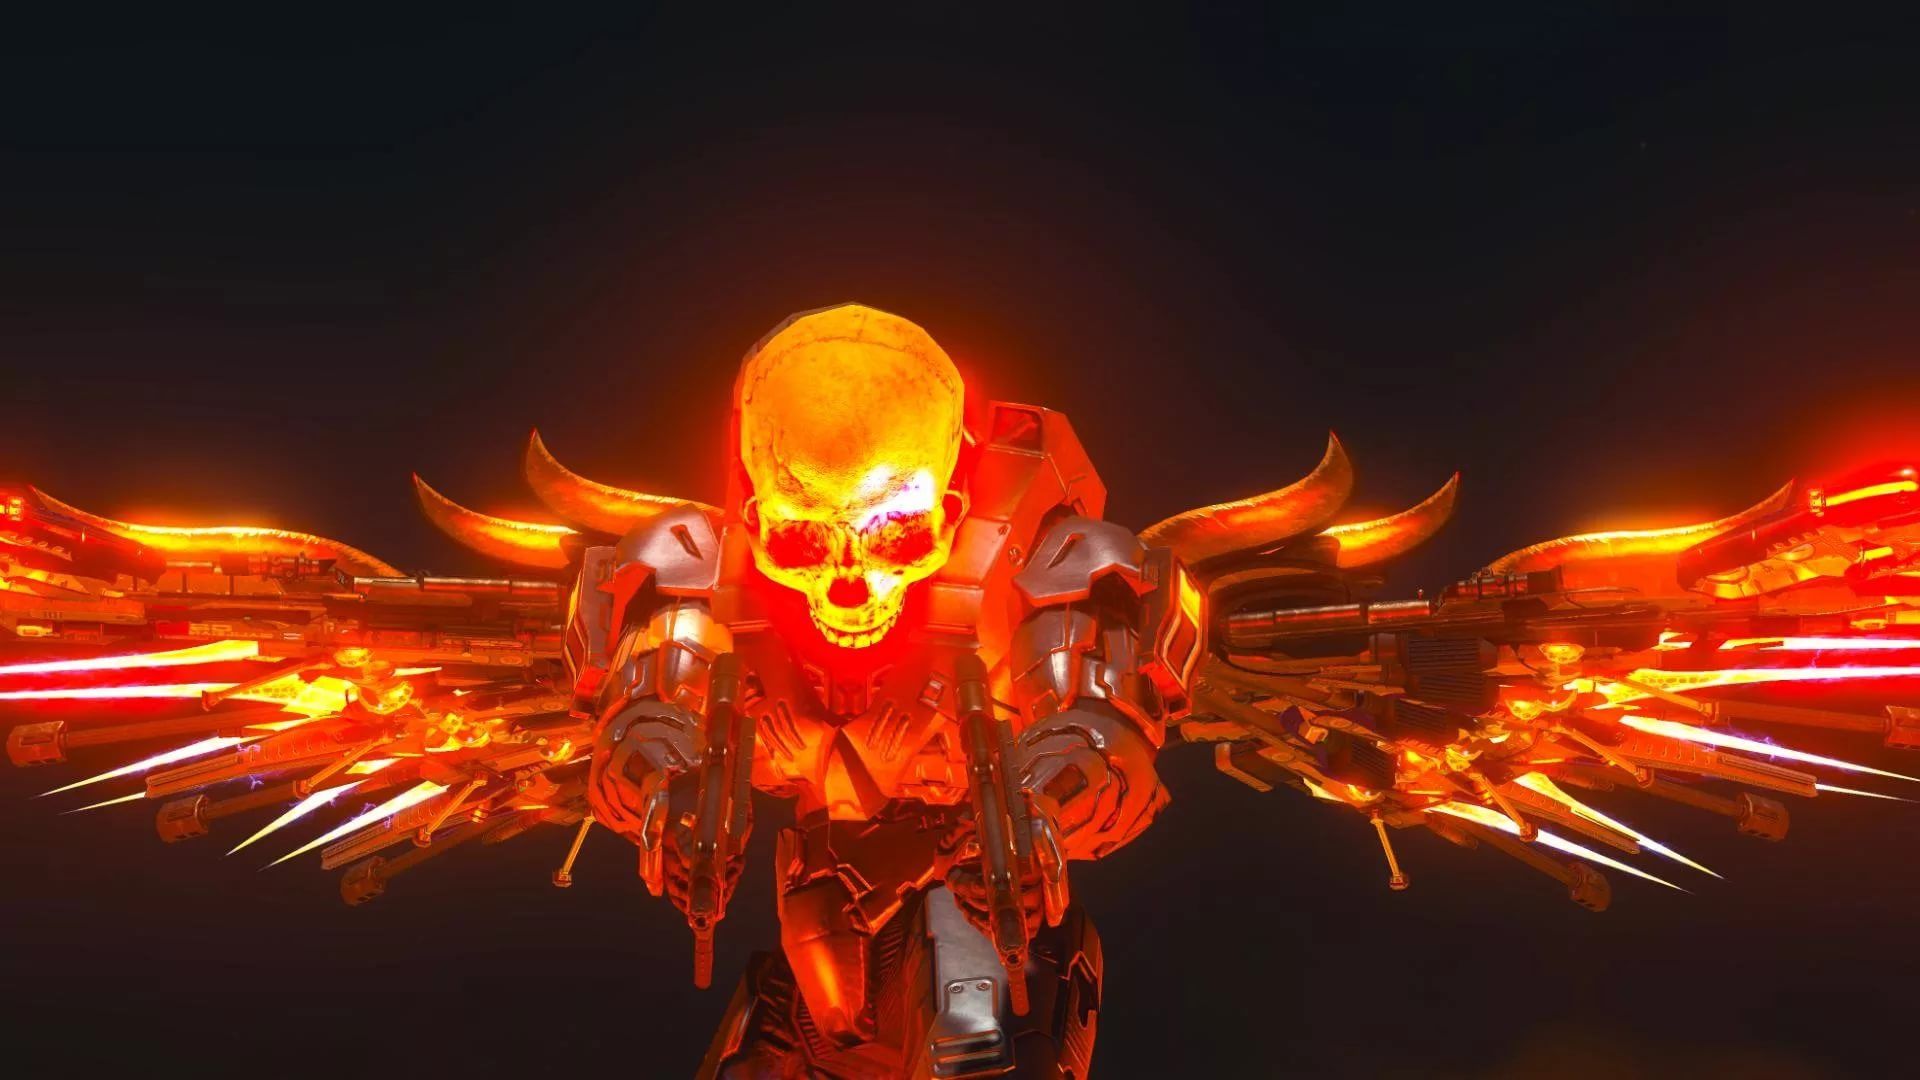 Flaming Skull screen wallpaper